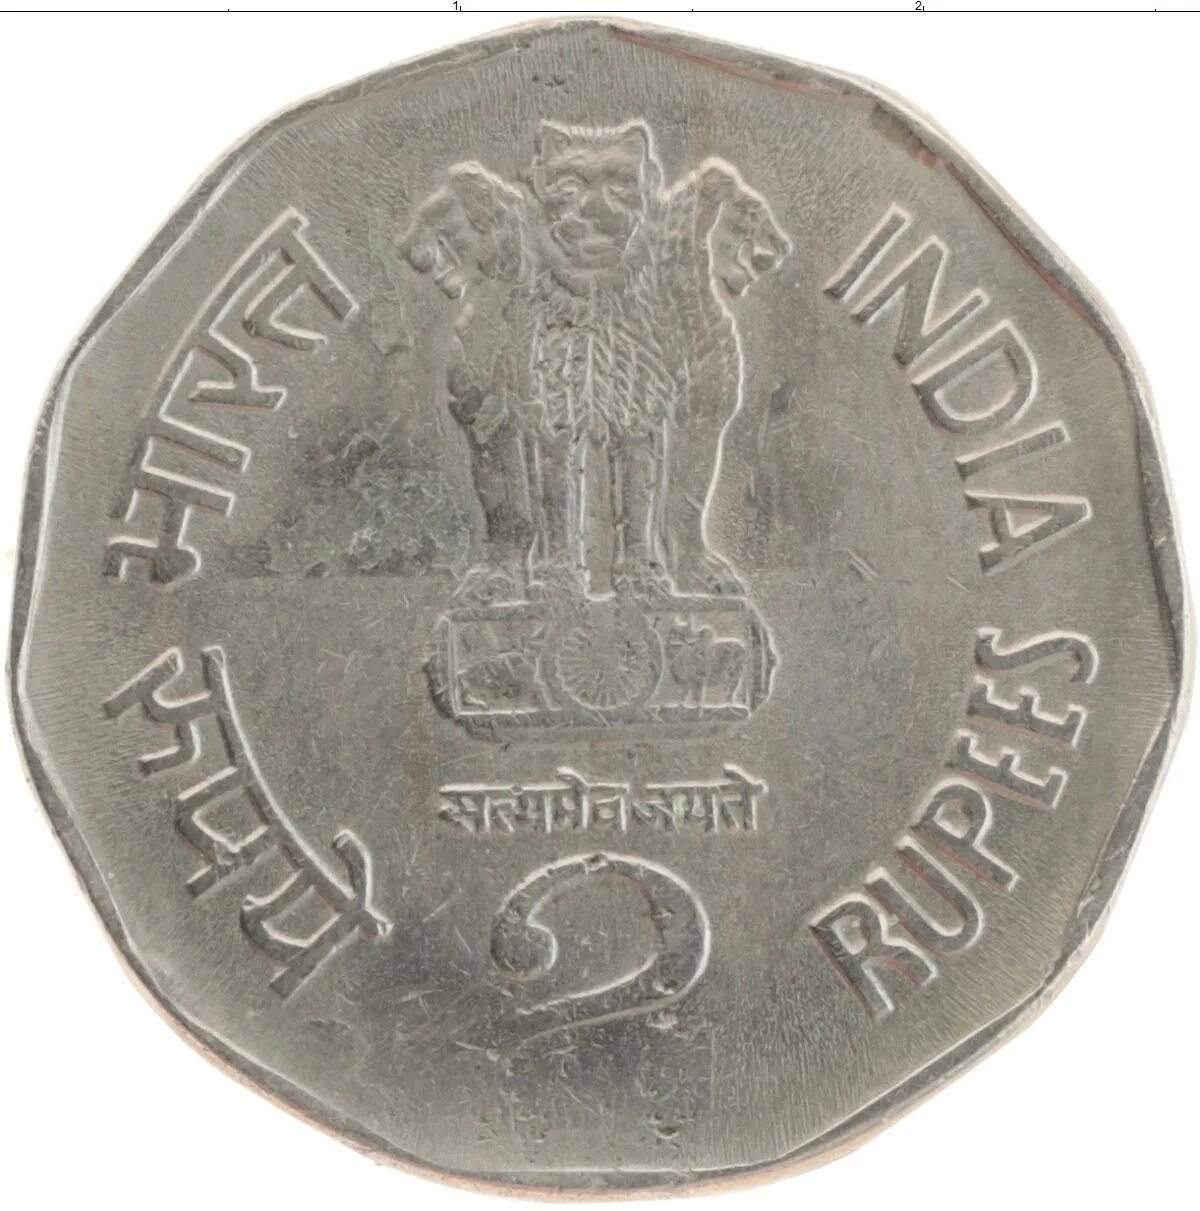 Монеты Индии. Монеты Индии 2 рупии. Монета Индии 2 рупии 2013. Индийские монеты 1818 года.